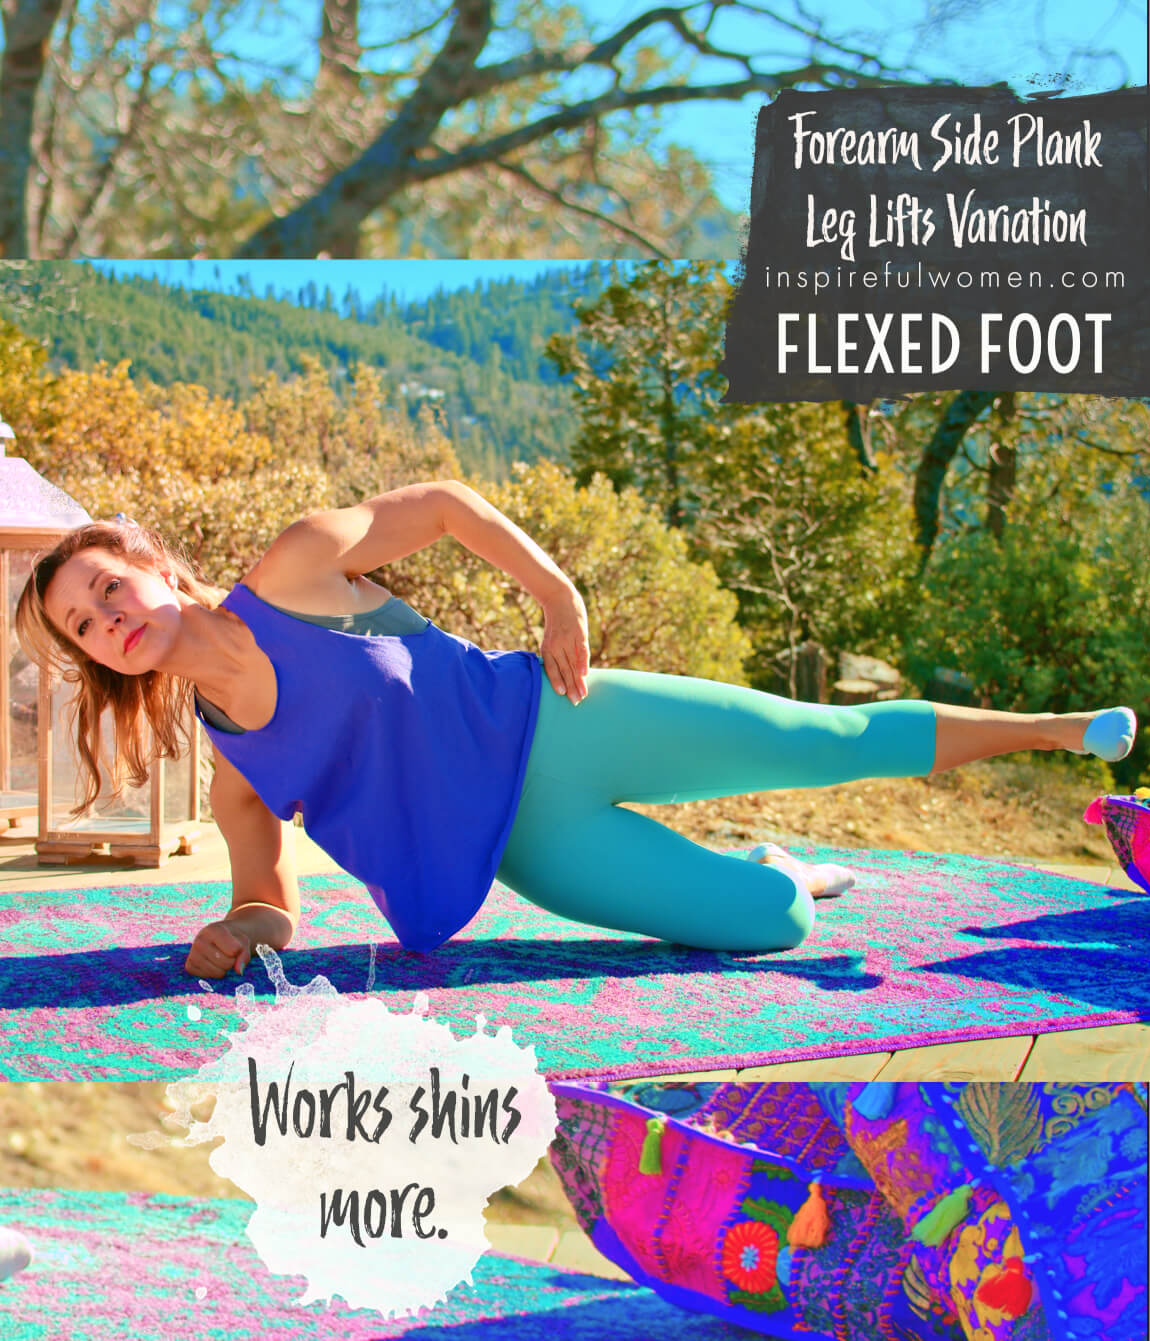 flexed-foot-forearm-side-plank-leg-raise-shins-glute-exercise-variation